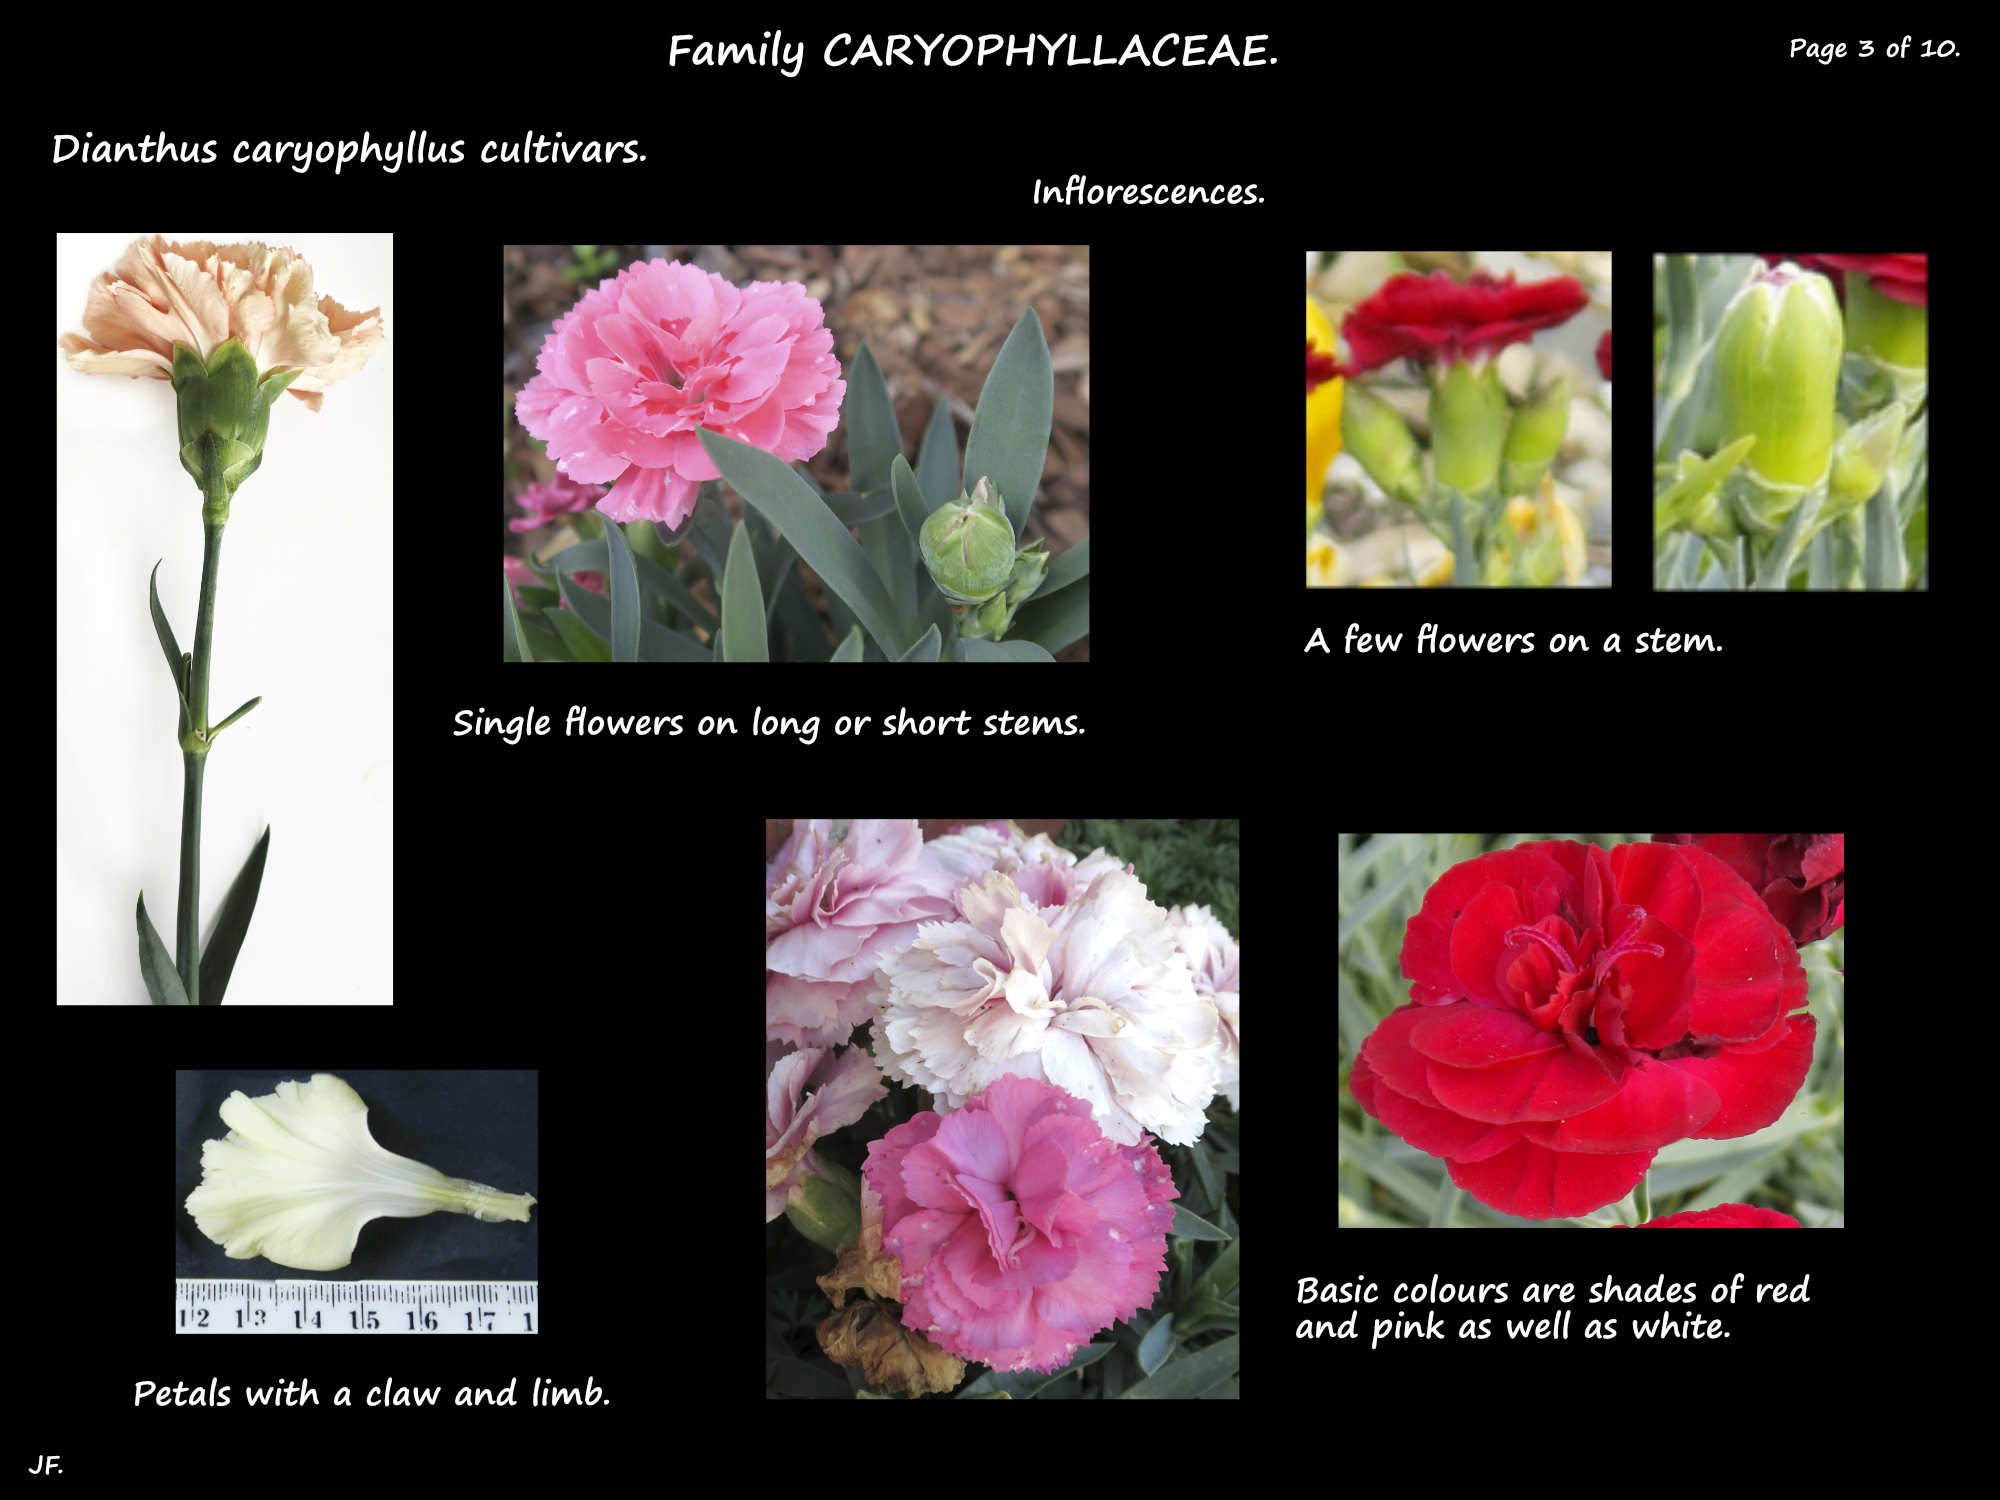 3 Carnation flowers